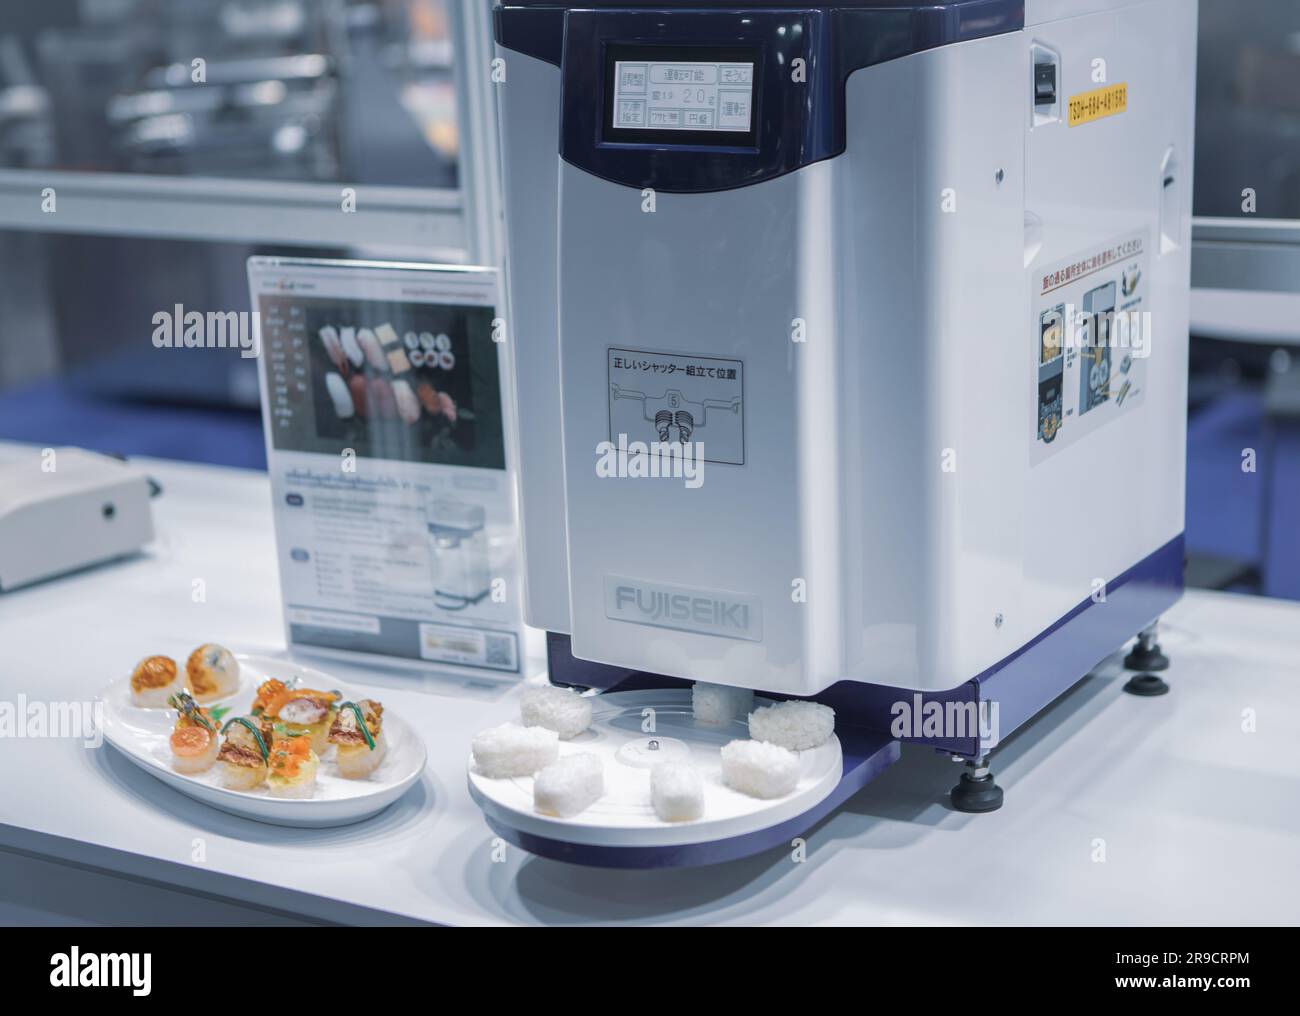 https://c8.alamy.com/comp/2R9CRPM/bangkok-thailand-june-14-2022-nigiri-robot-machine-making-rice-ball-for-sushi-display-in-propak-2023-2R9CRPM.jpg